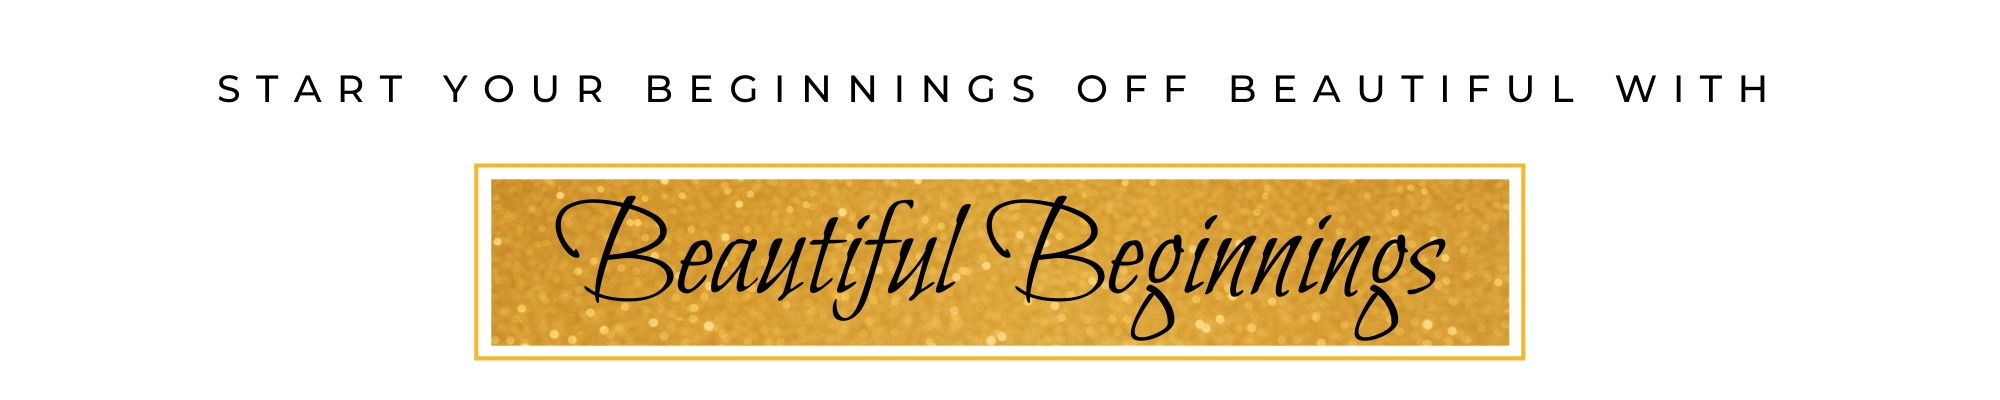 Start your beginnings off beautiful with beautiful beginnings